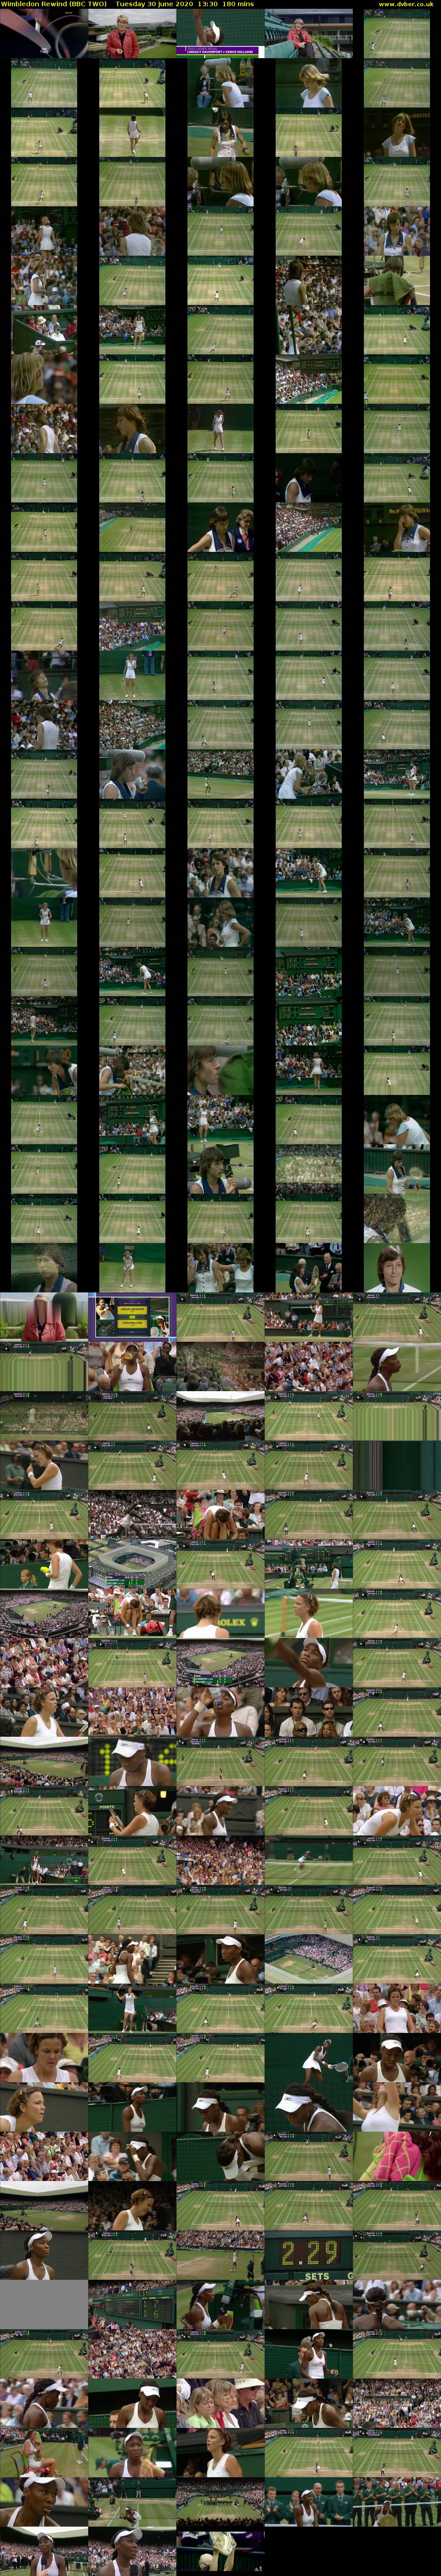 Wimbledon Rewind (BBC TWO) Tuesday 30 June 2020 13:30 - 16:30